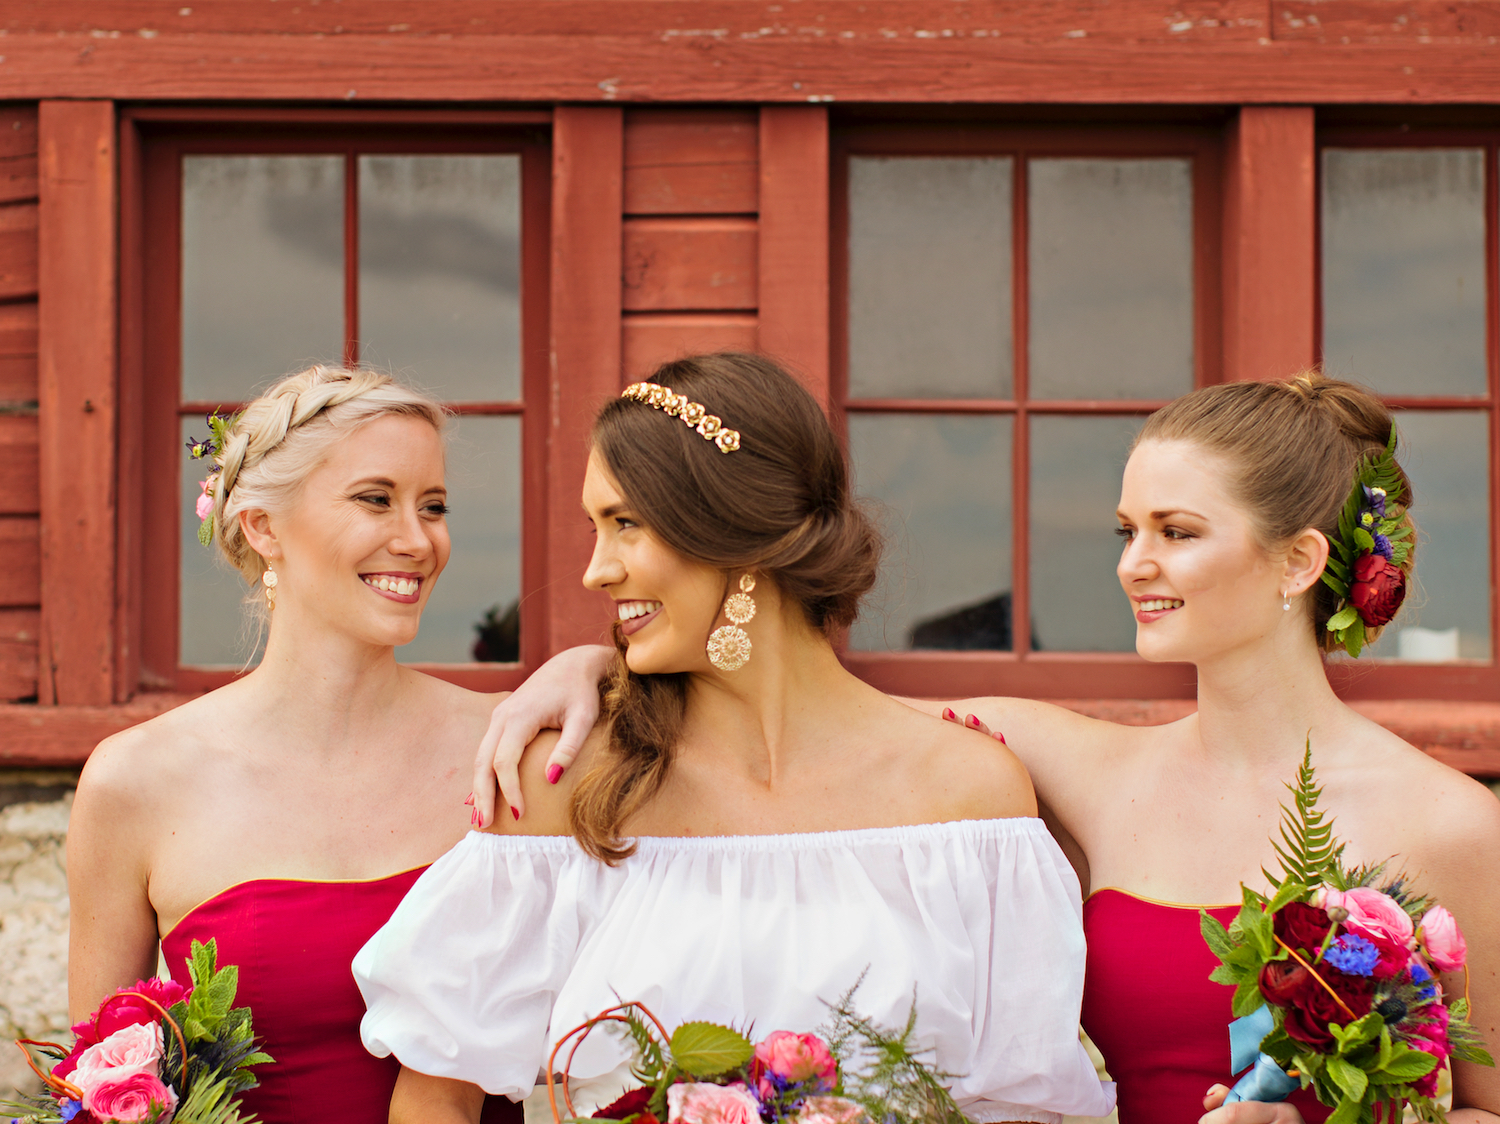 Our premier wedding services are unparalleled — Salon Bella